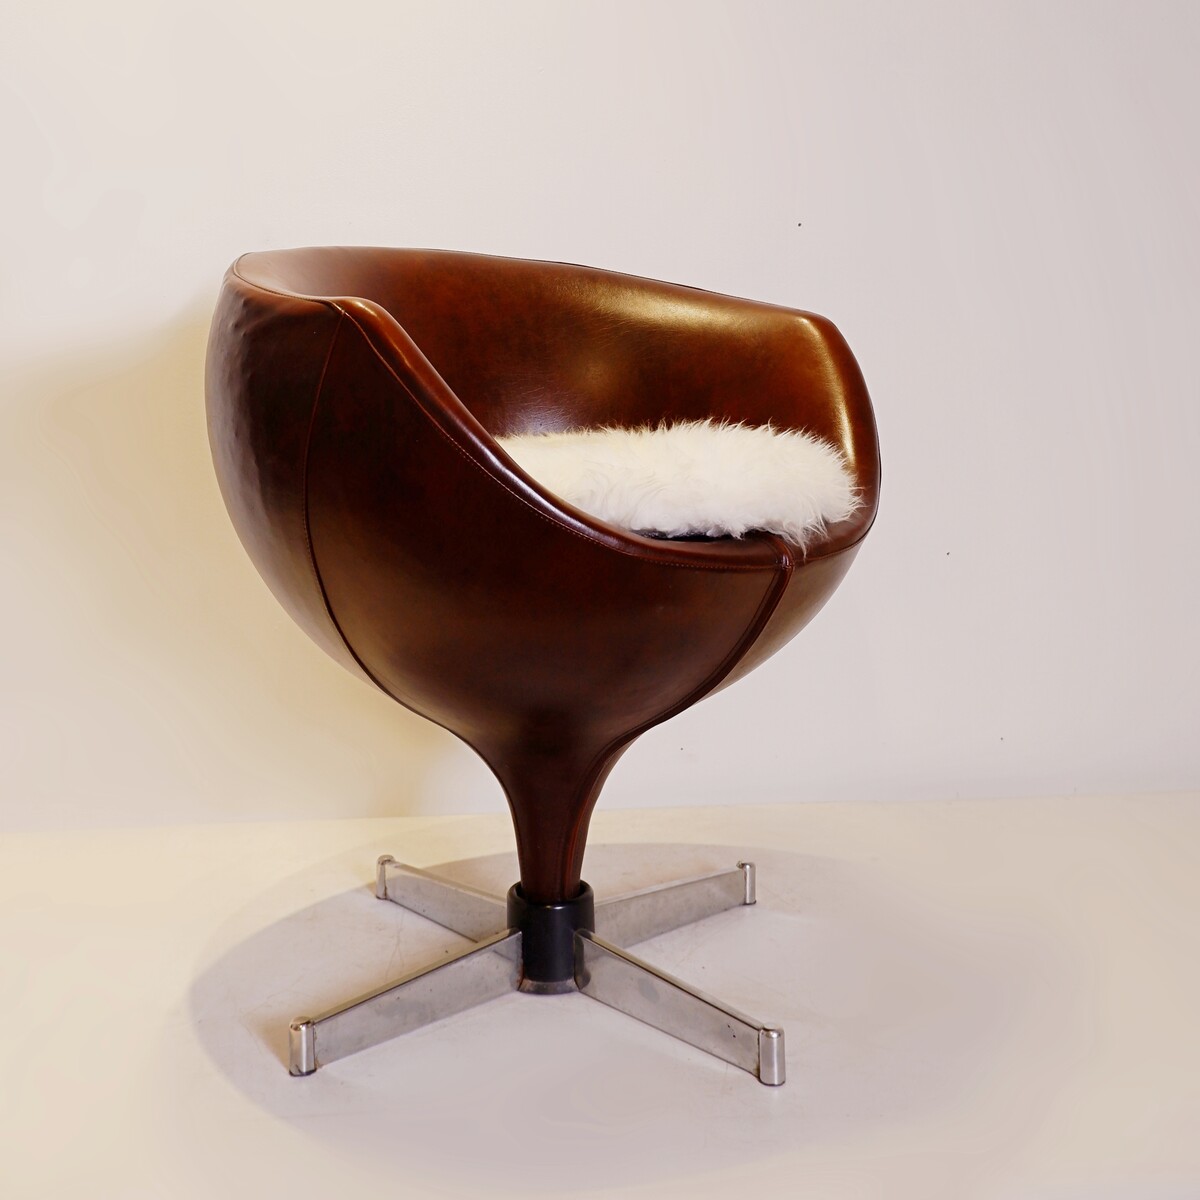 Luna Ball side chair by Pierre Guariche, 1960's